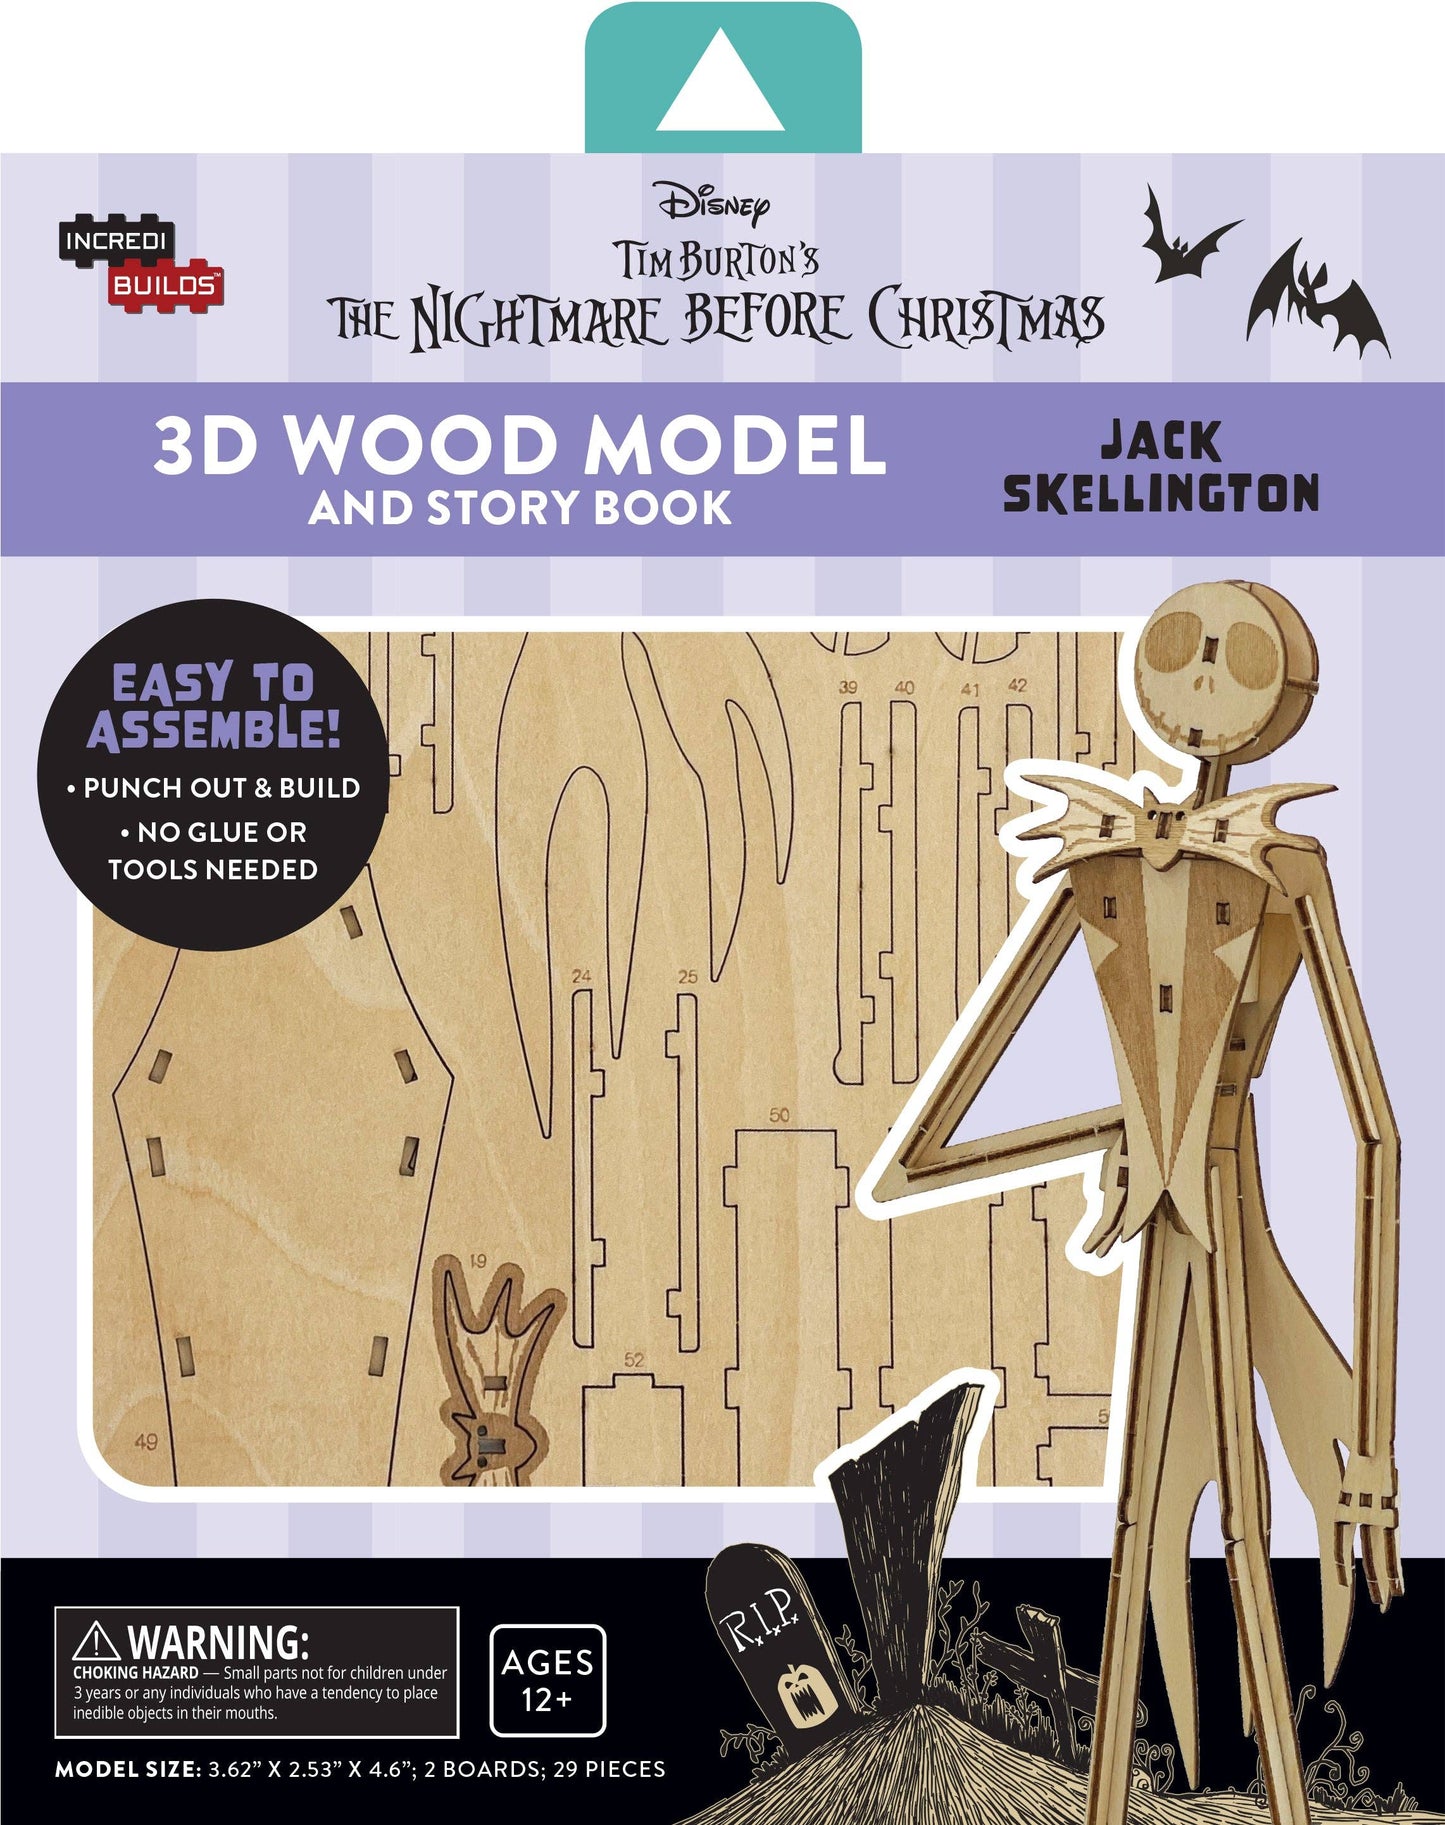 IncrediBuilds Wood Model Nightmare Before Christmas Jack Skellington Story Book